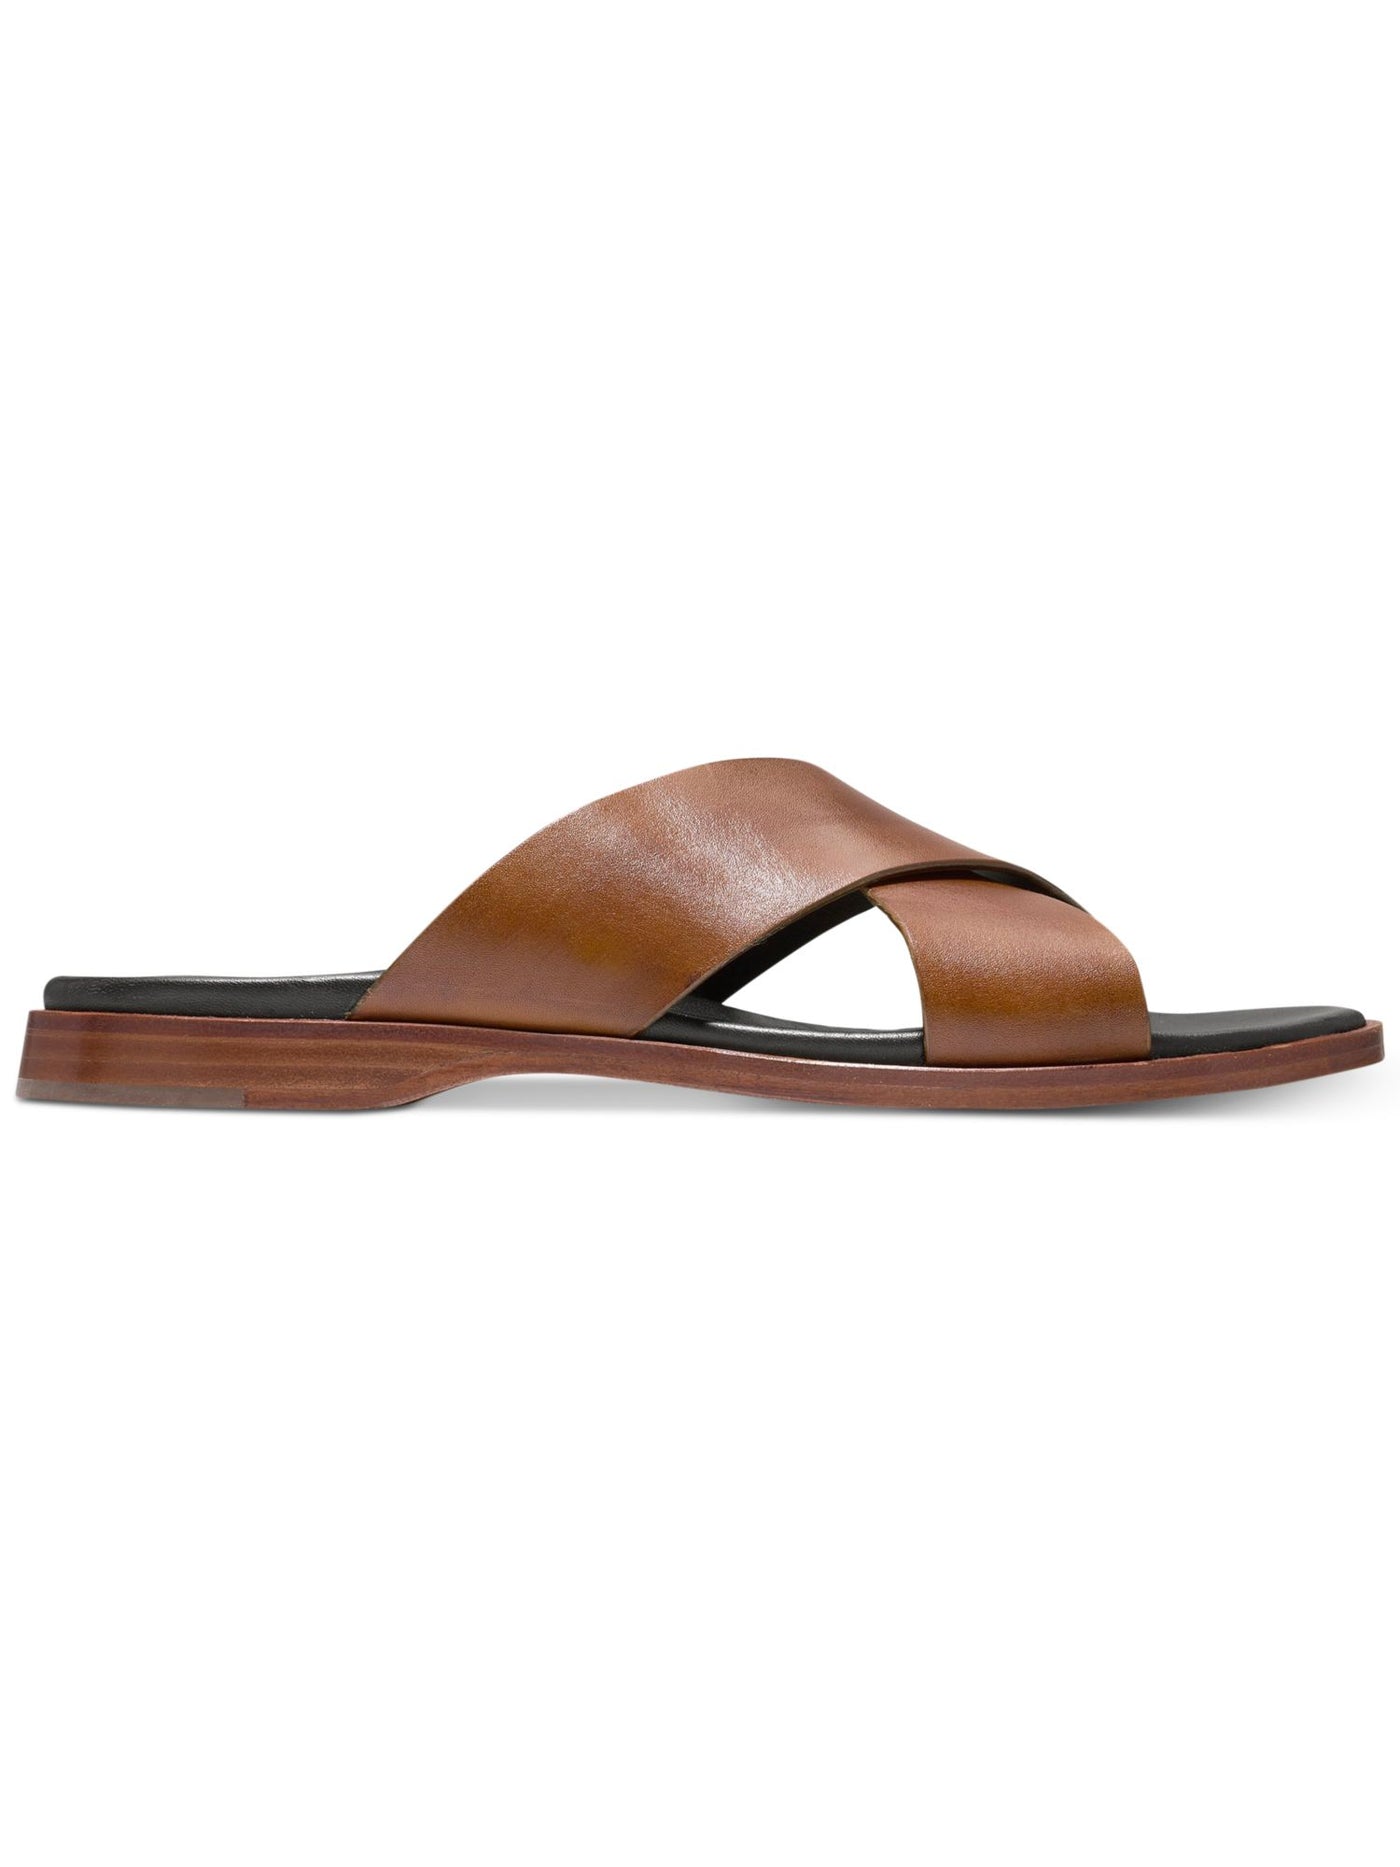 COLE HAAN Mens Brown Crisscross Bands Padded Goldwyn 2.0 Open Toe Slip On Leather Slide Sandals Shoes 12 M